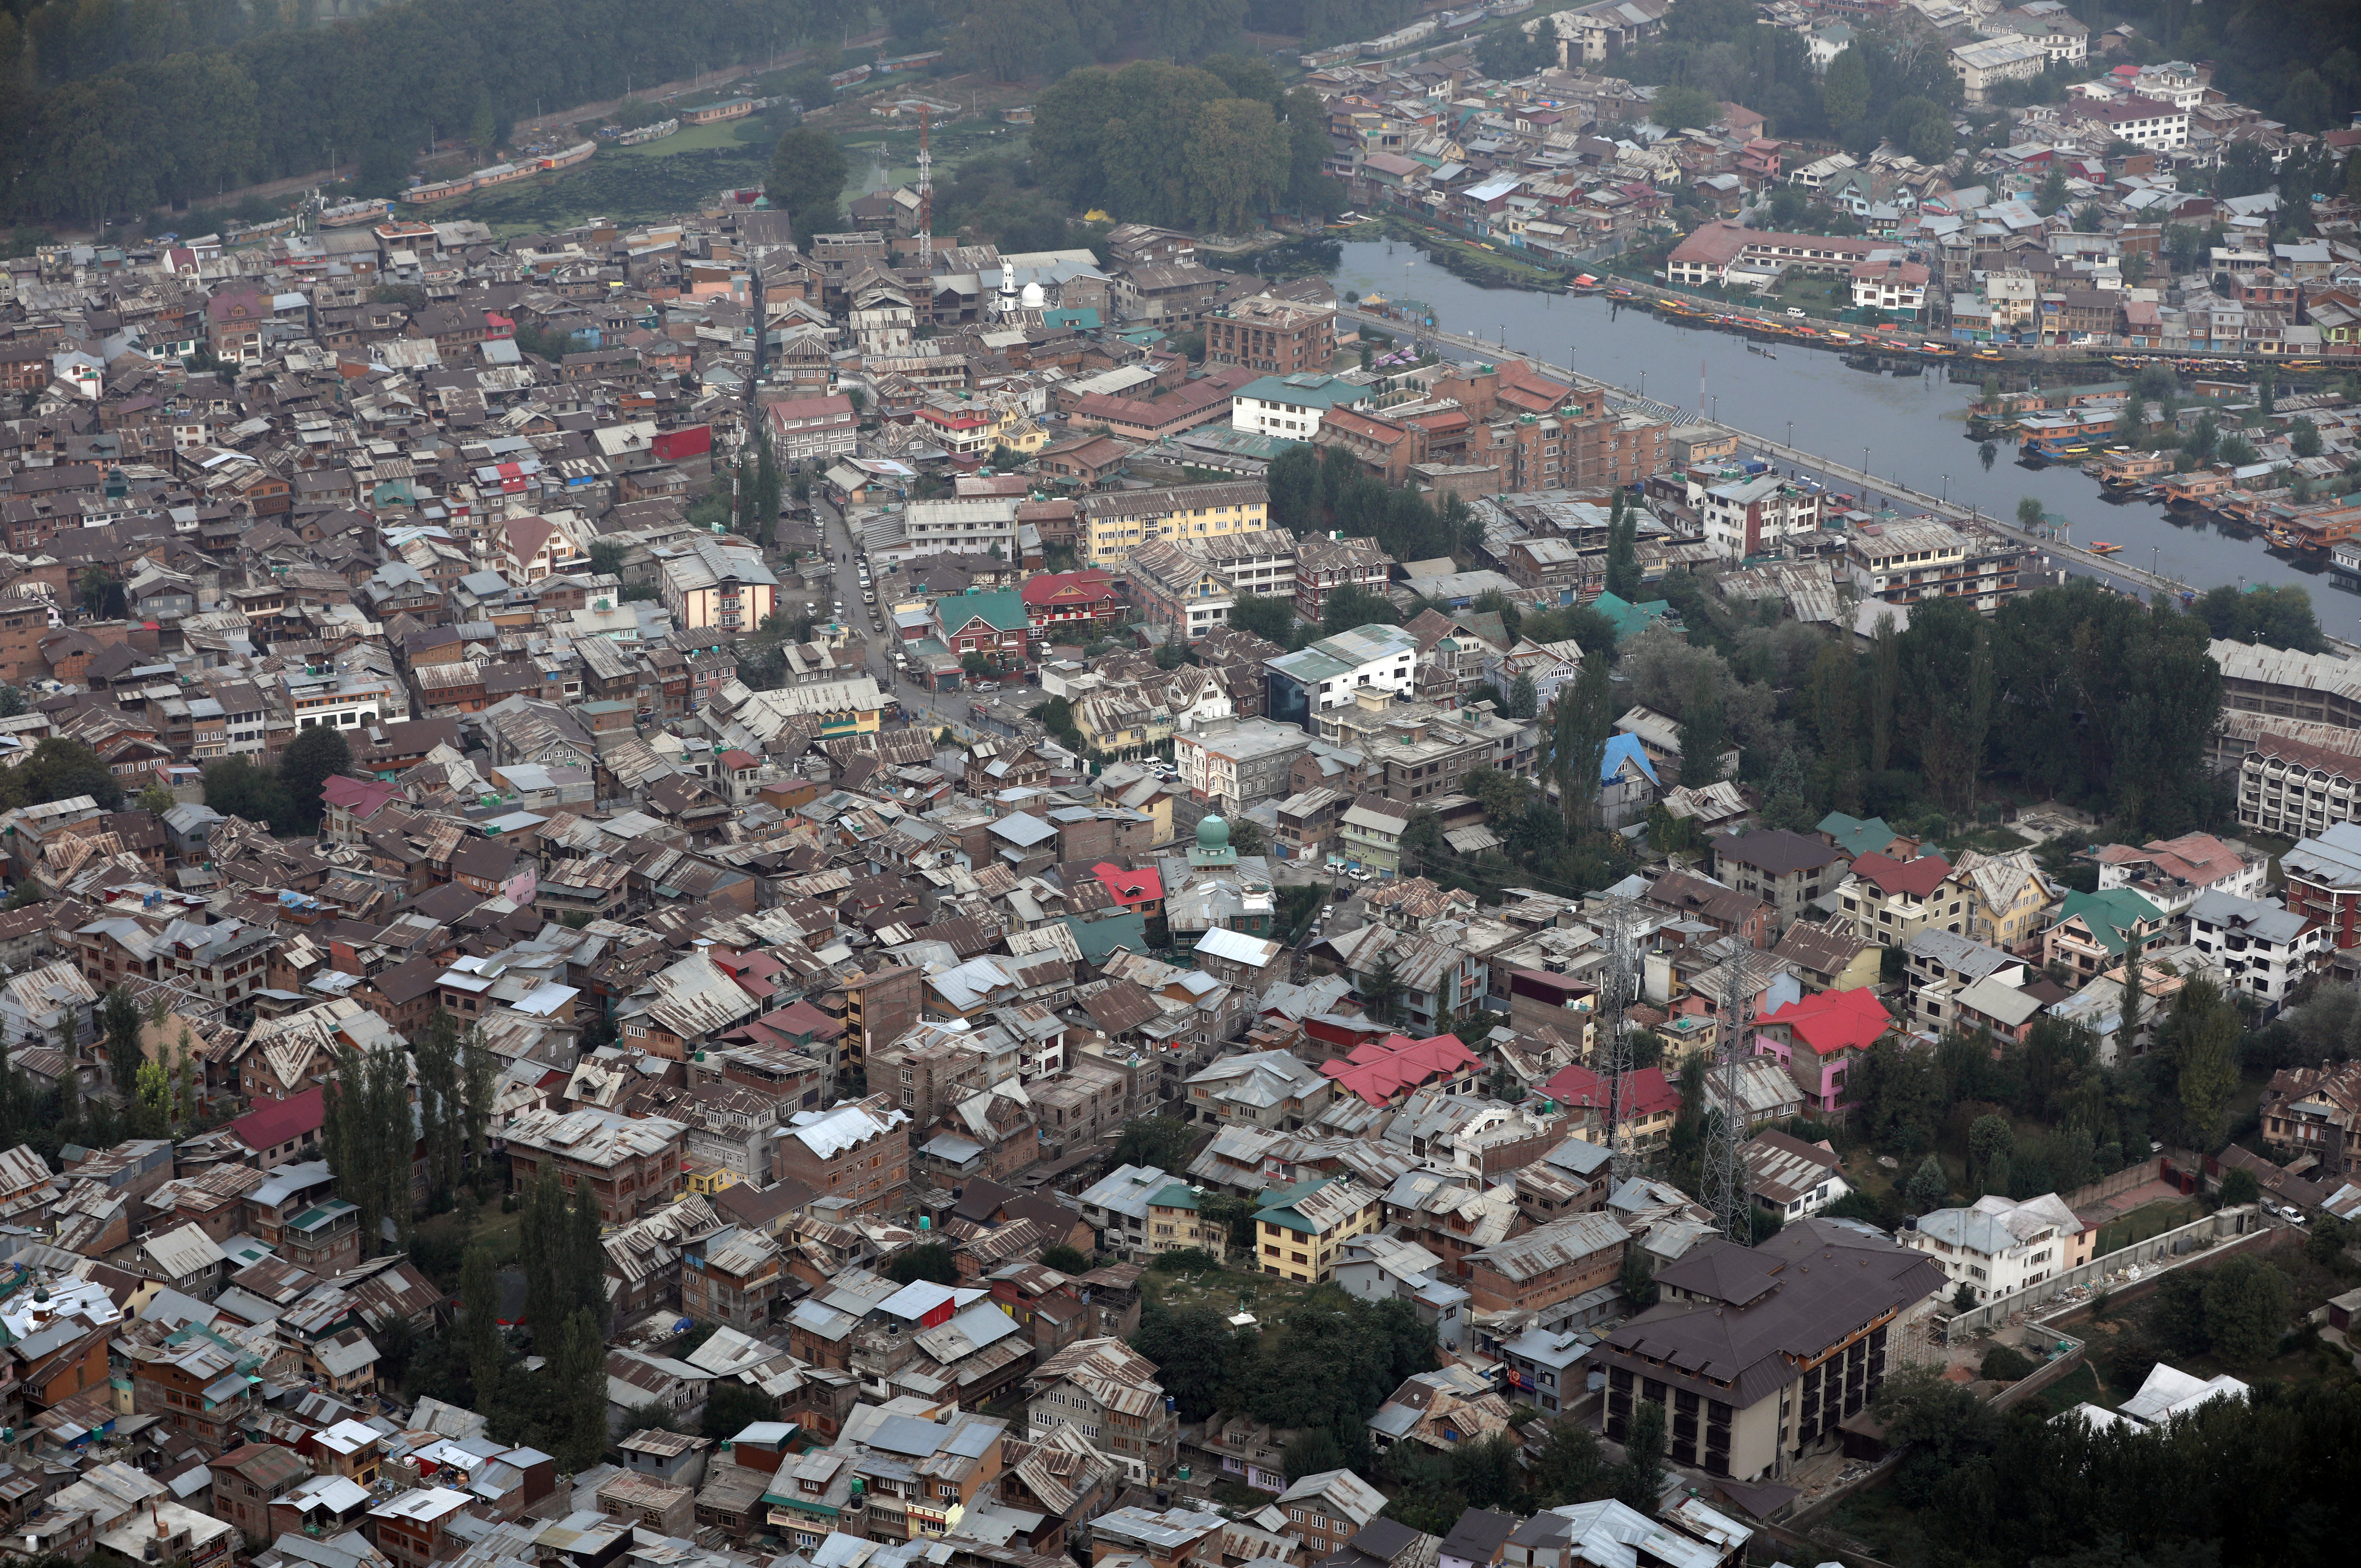 An aerial view shows residential houses in Srinagar